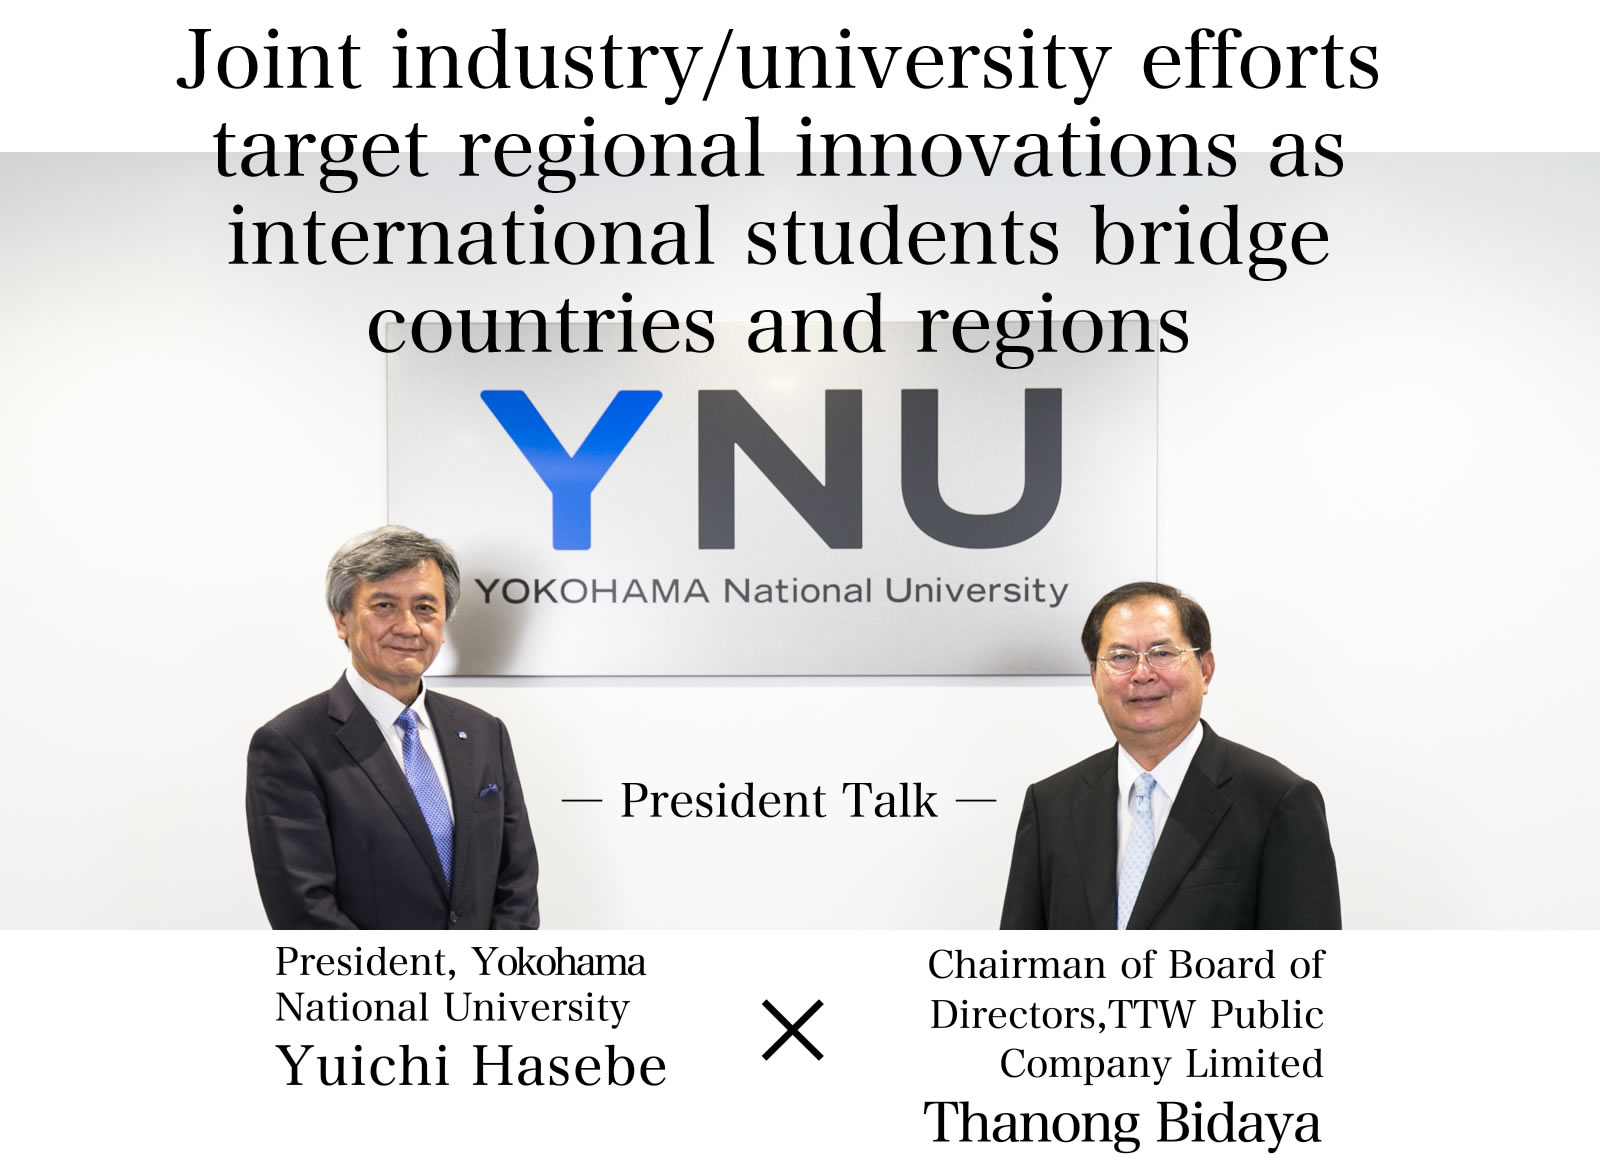 Joint industry/university efforts target regional innovations as international students bridge countries and regions